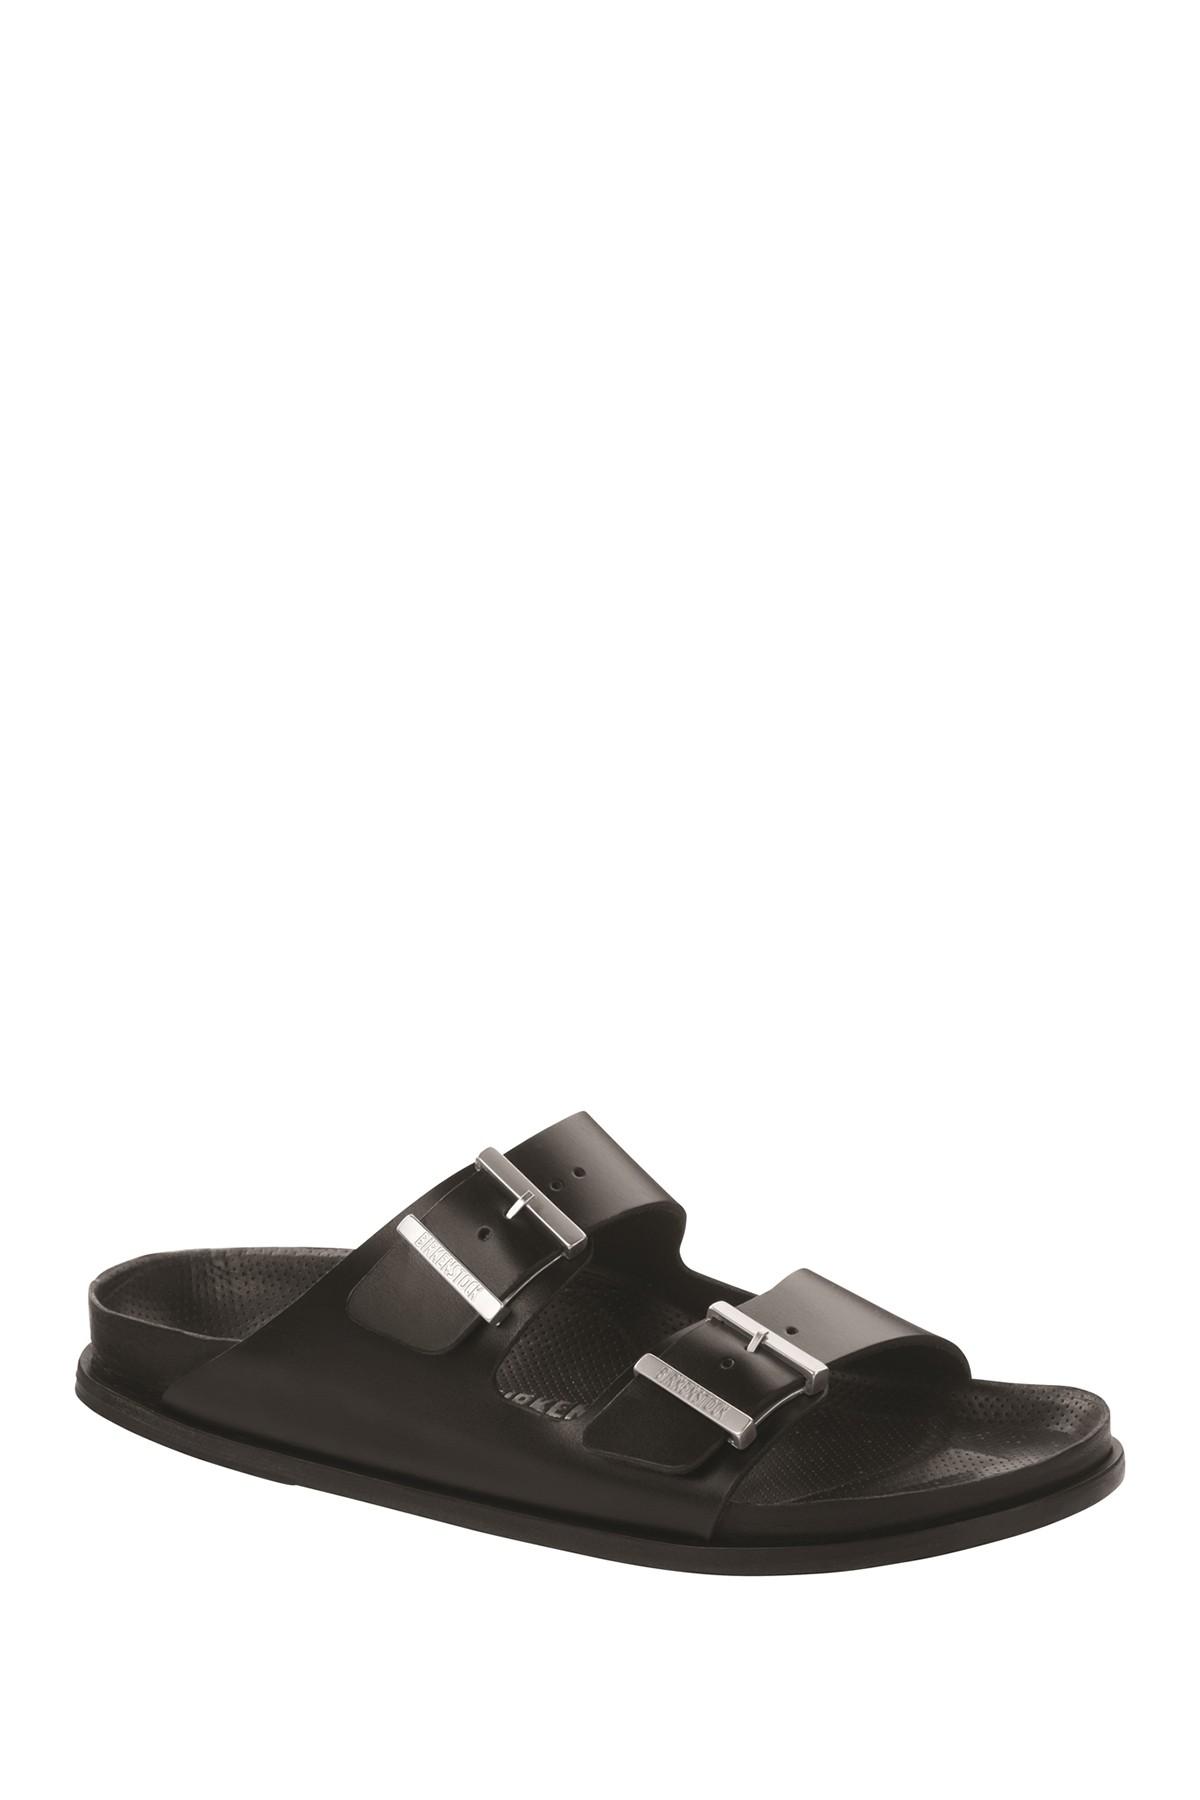 Birkenstock Arizona Premium Black Leather Sandal - Discontinued for Men -  Lyst